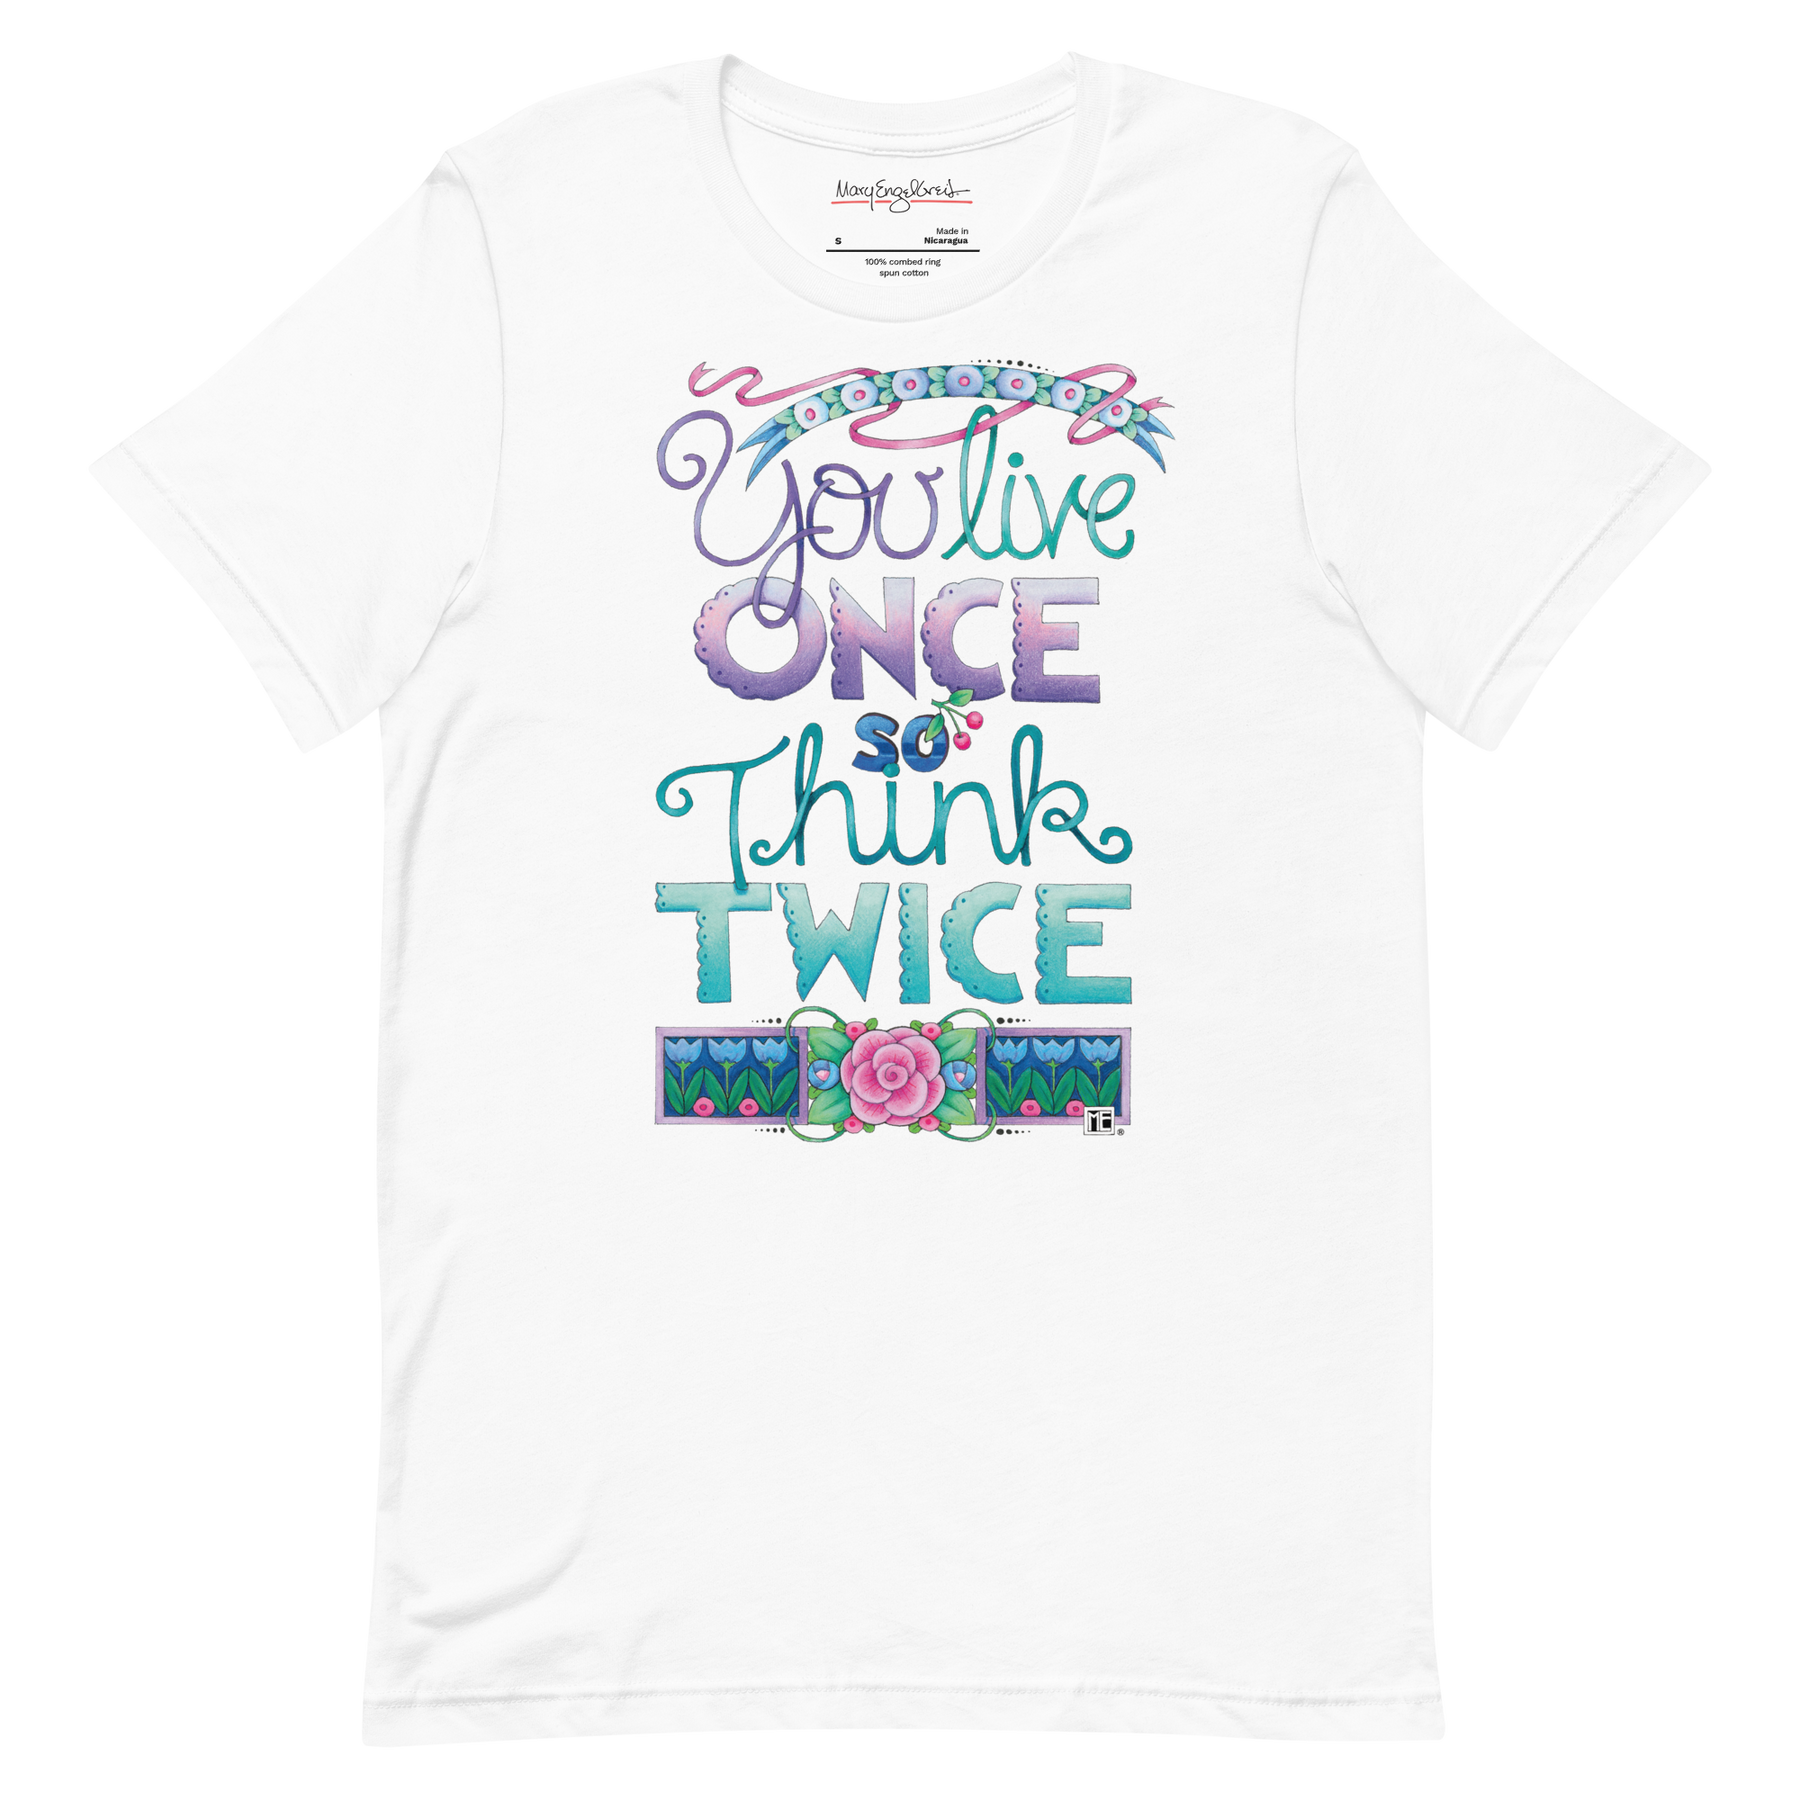 Live Once Unisex T-Shirt